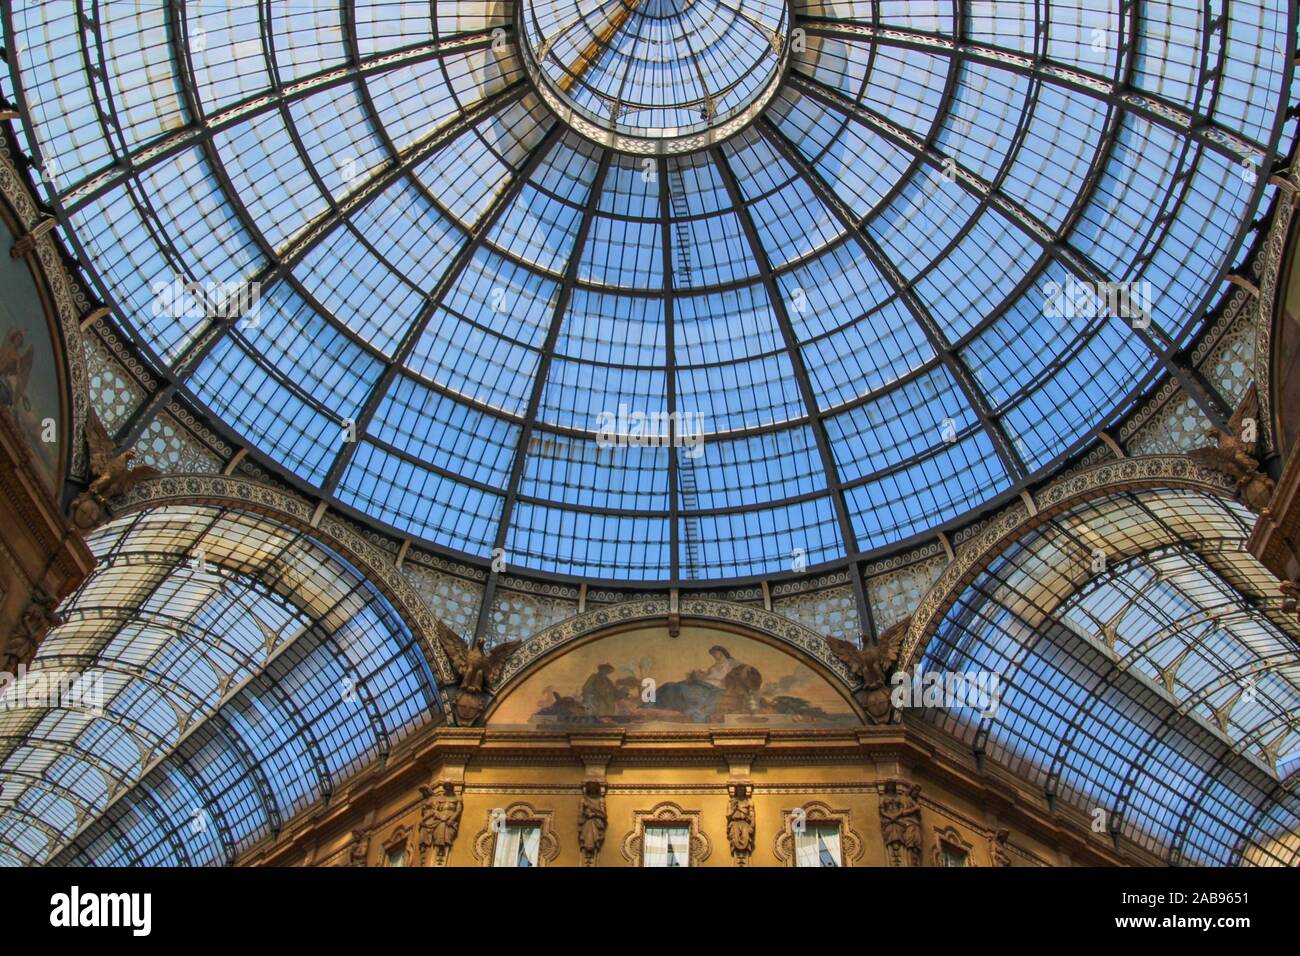 Victor Manuel's gallery in Milan. Stock Photo